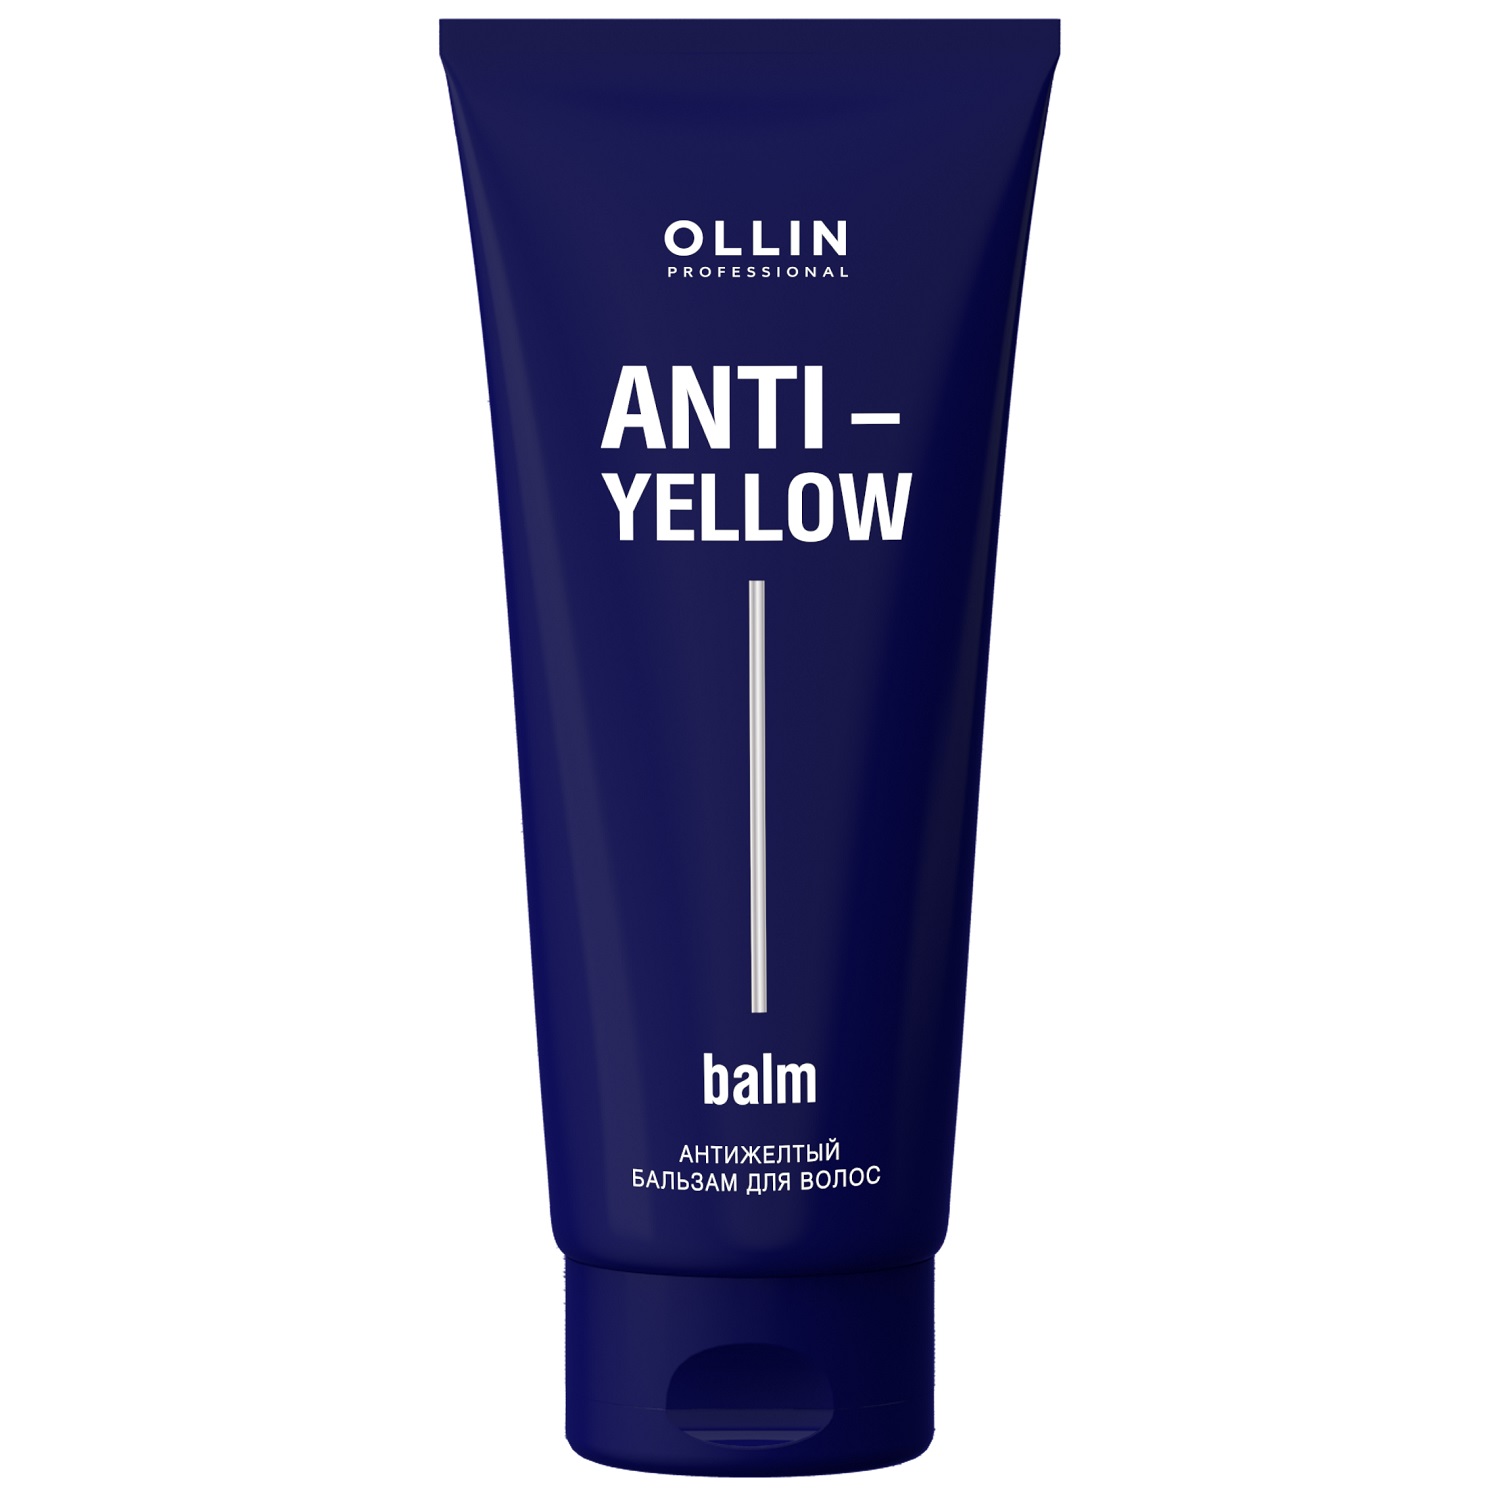 Ollin Professional Антижелтый бальзам для волос Anti-Yellow Balm, 250 мл (Ollin Professional, Anti-Yellow)